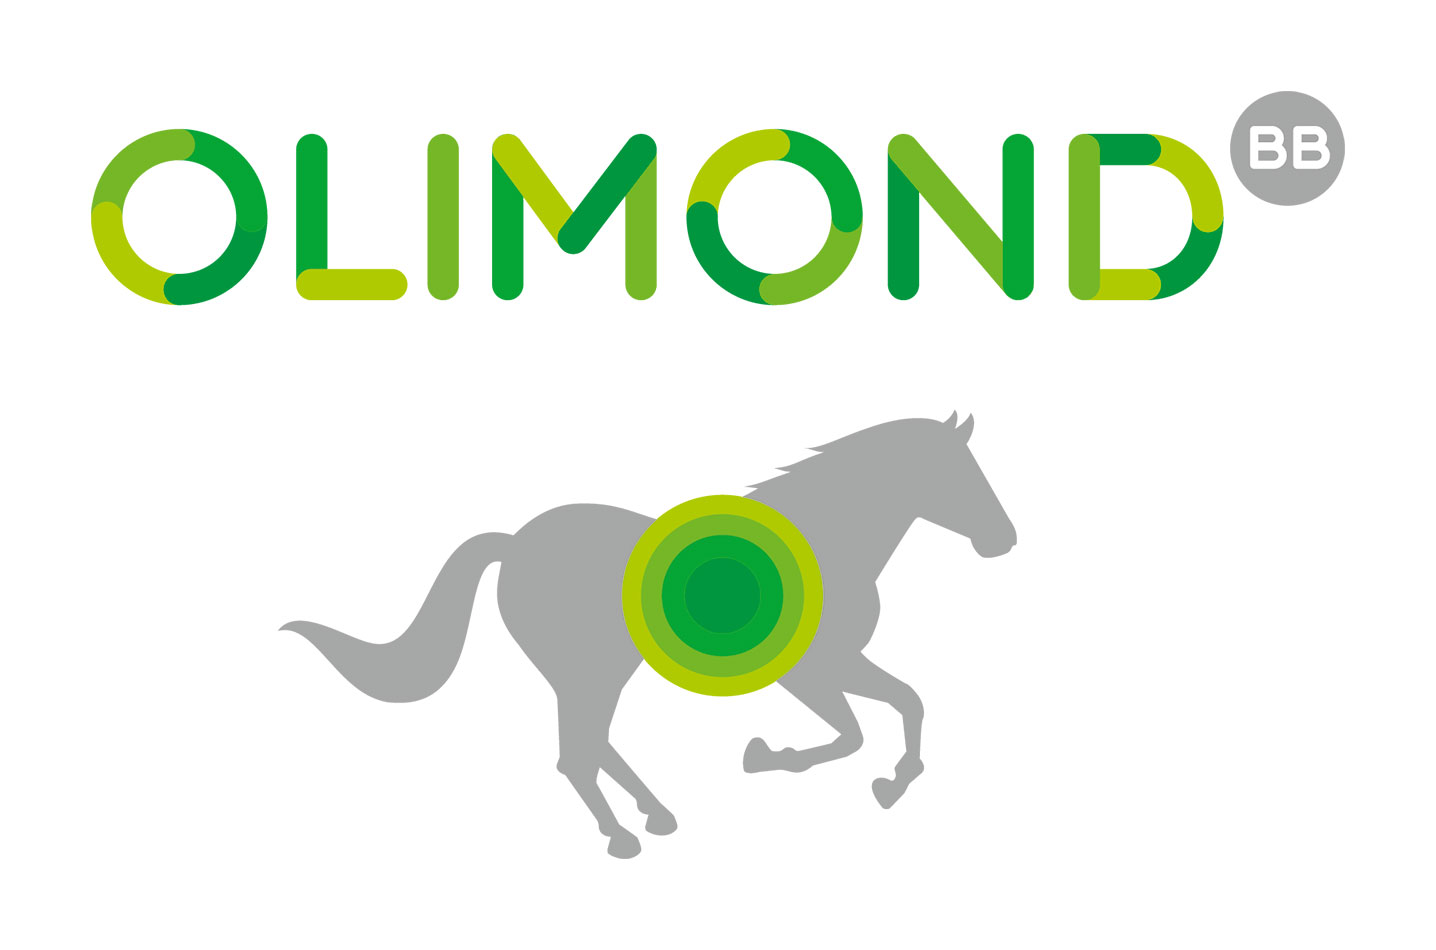 03_olimond_bb_logo